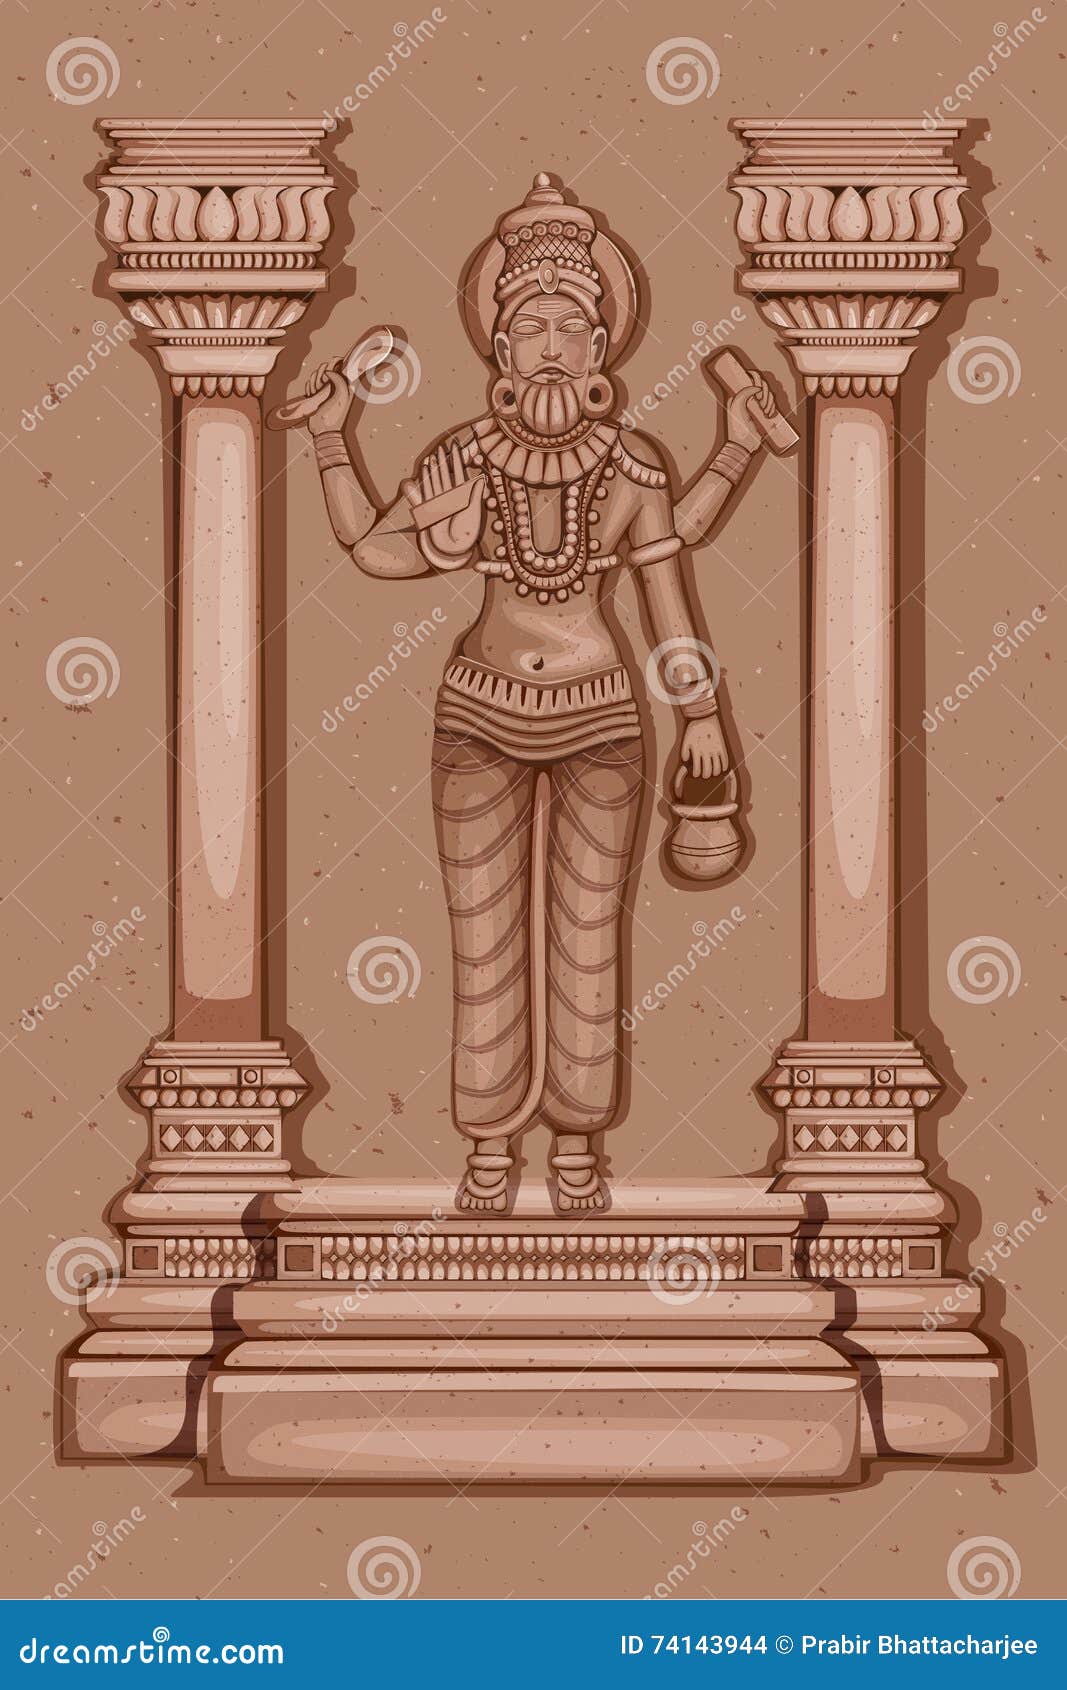 Vintage Statue of Indian God Vishwakarma Sculpture Stock Vector ...